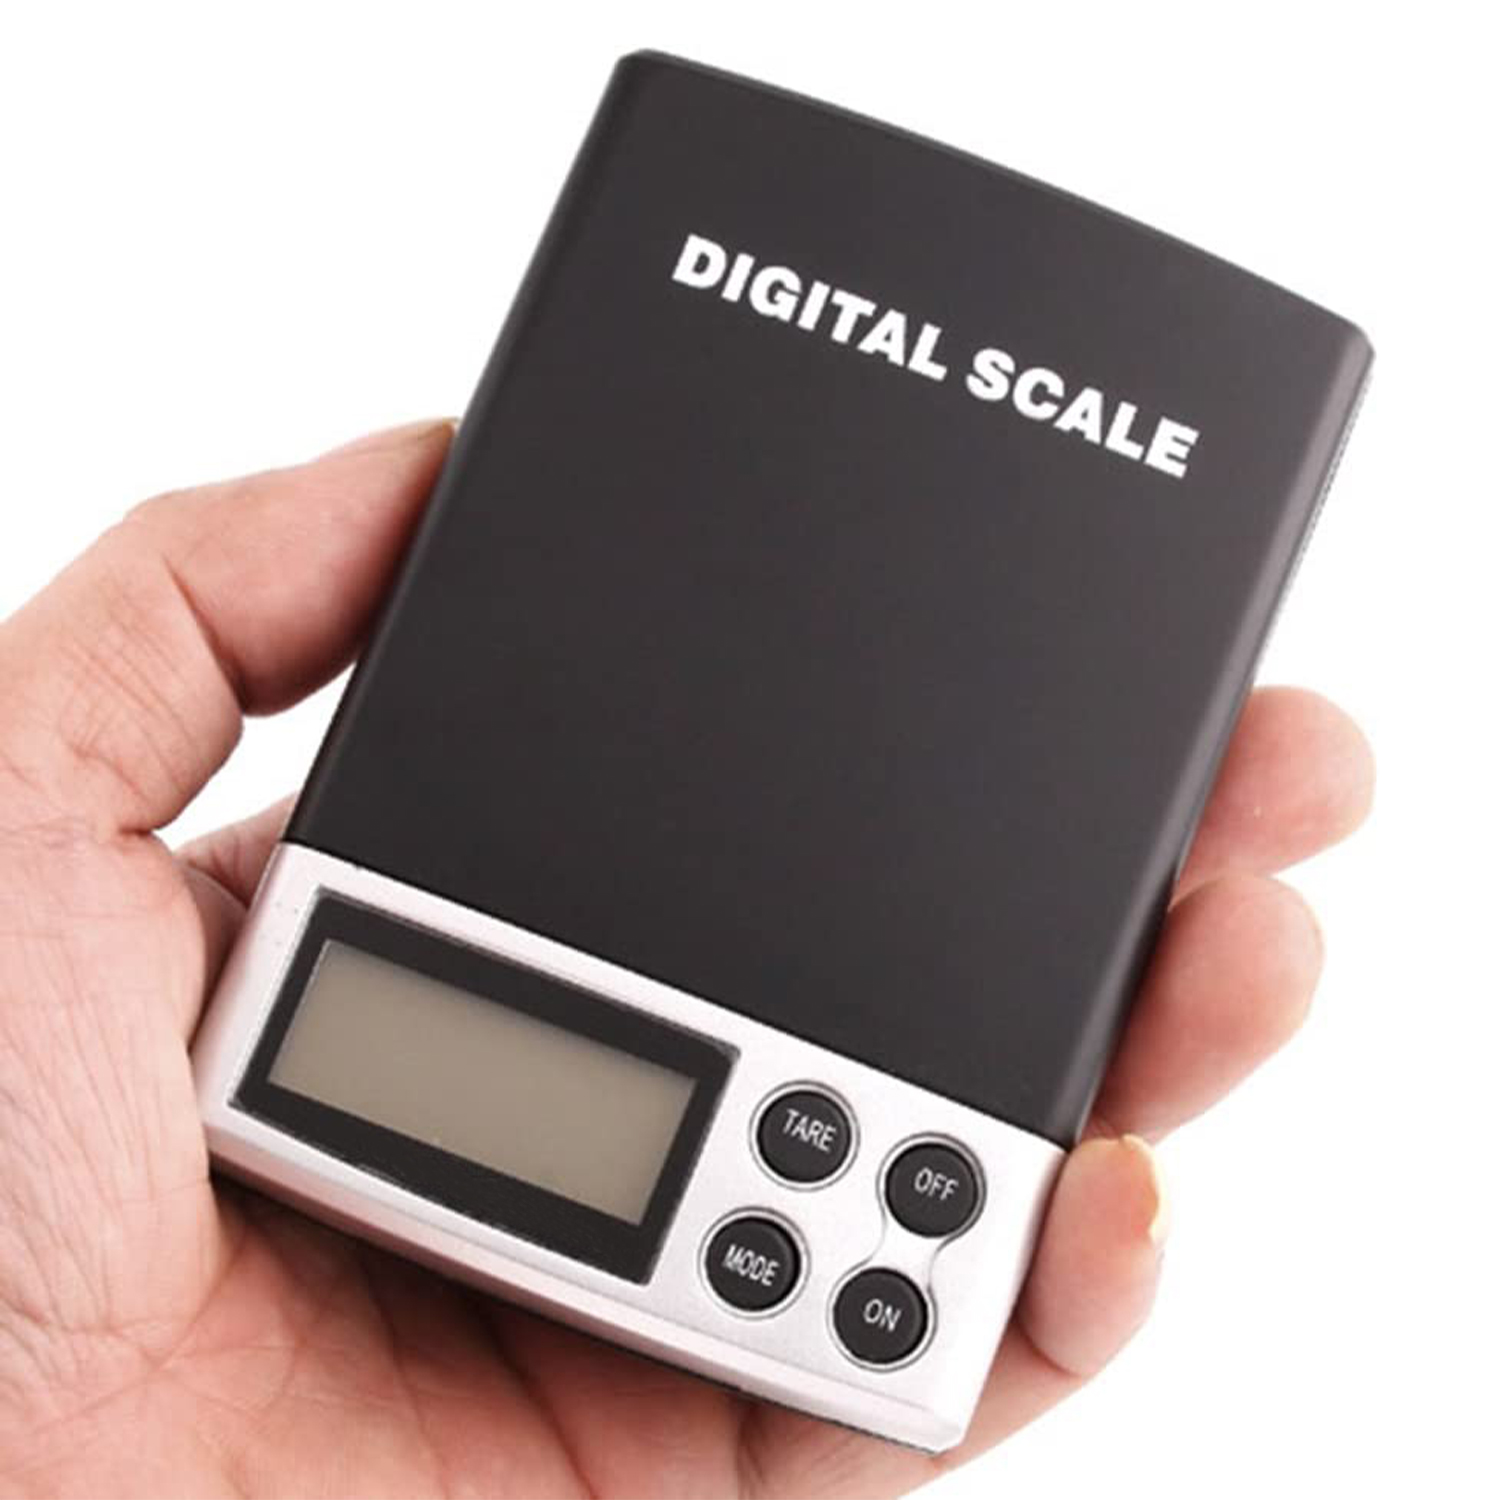 LCD Pocket Digital Scales Mini Electronic Scale Joblot 0.01g - 200g JOBLOT 50pcs